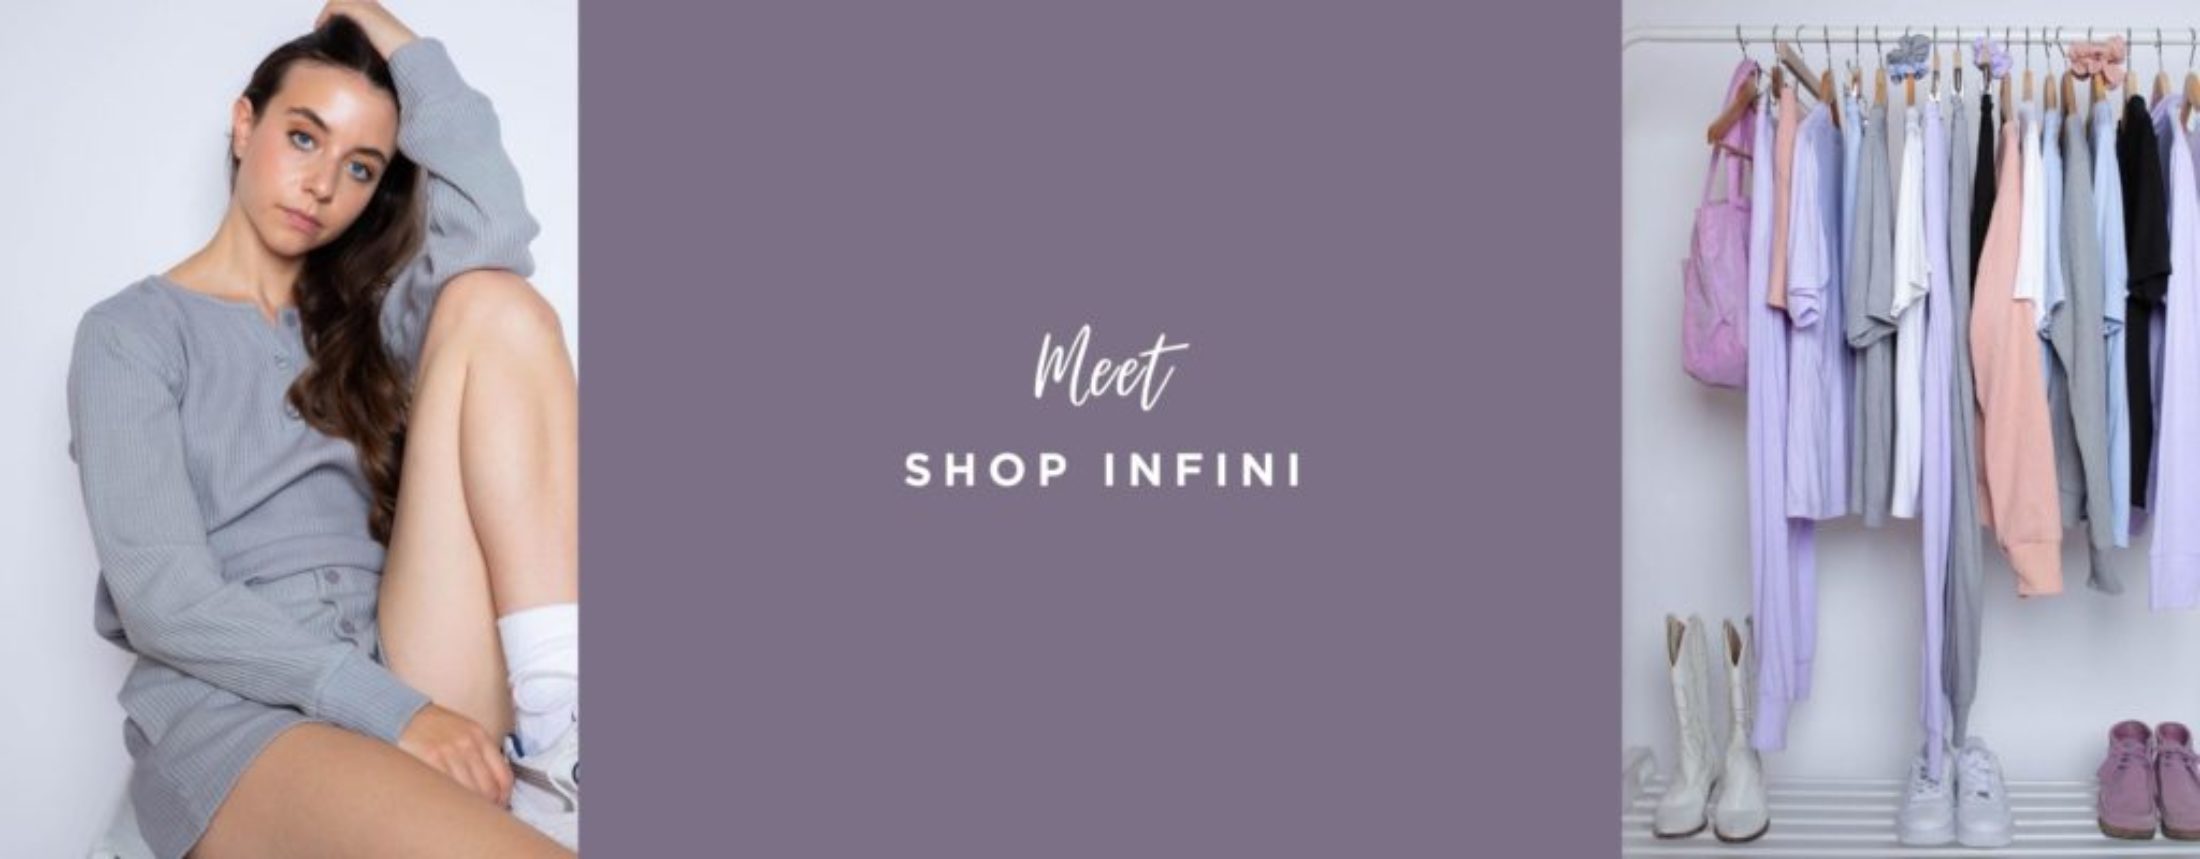 Meet Shop Infini